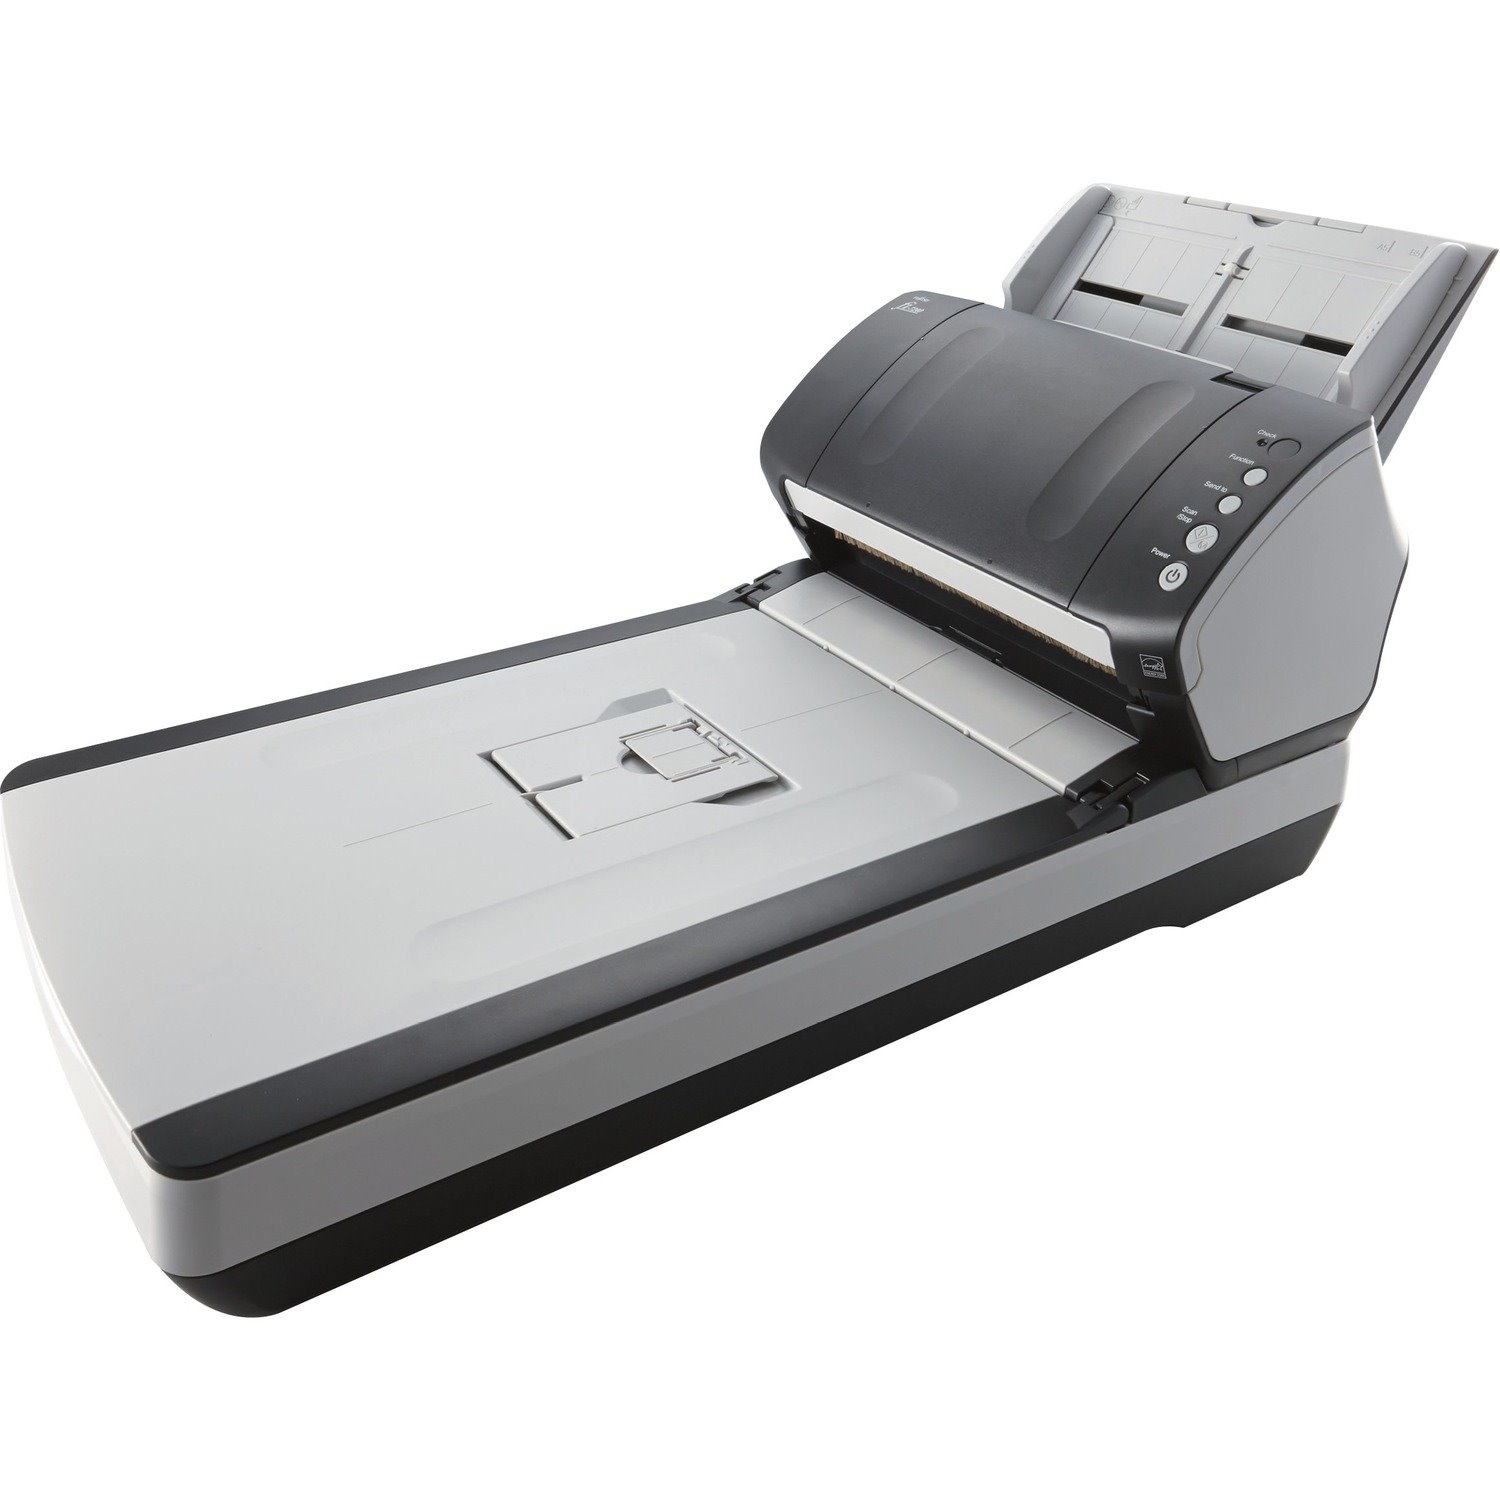 Fujitsu ImageScanner fi-7240 Sheetfed/Flatbed Scanner - 600 dpi Optical